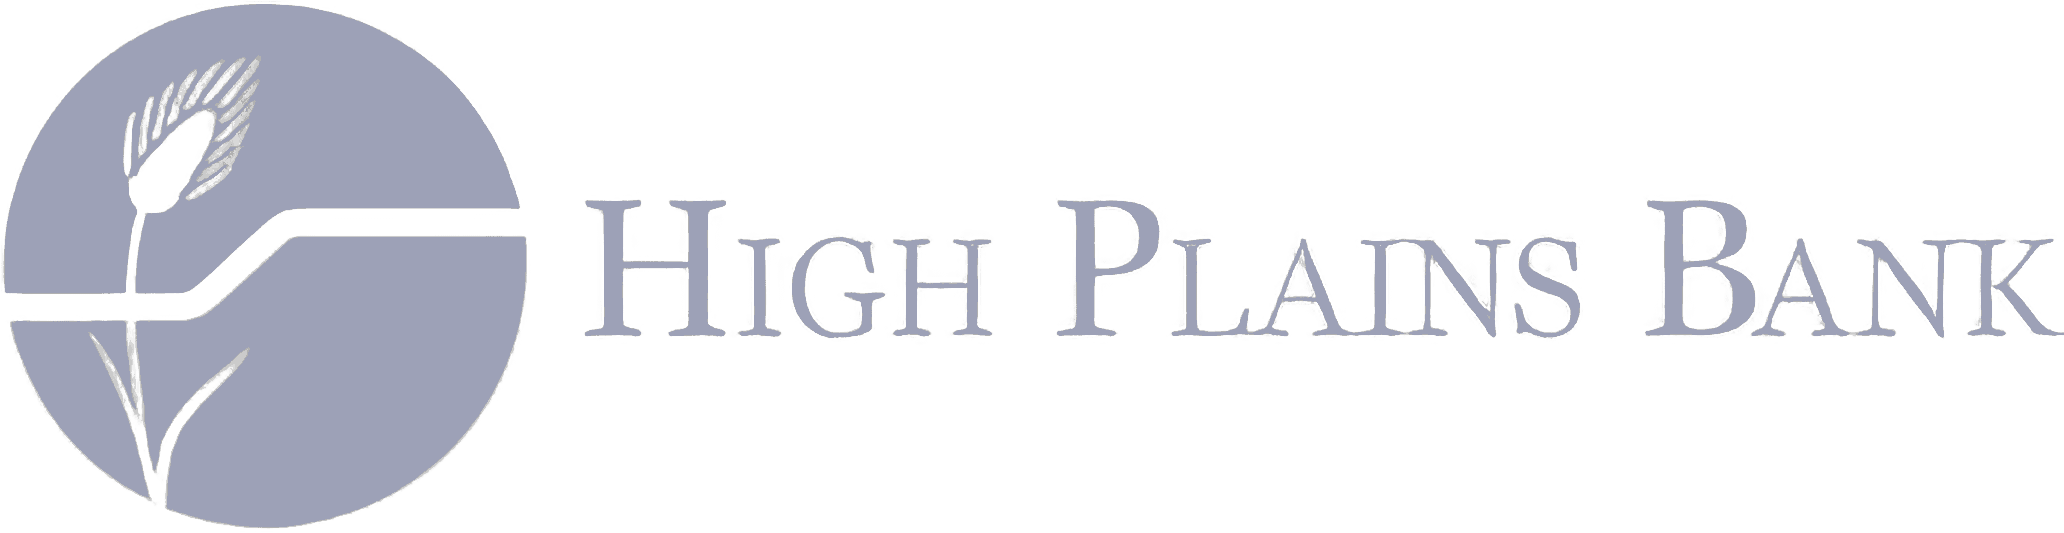 High Plains bank logo